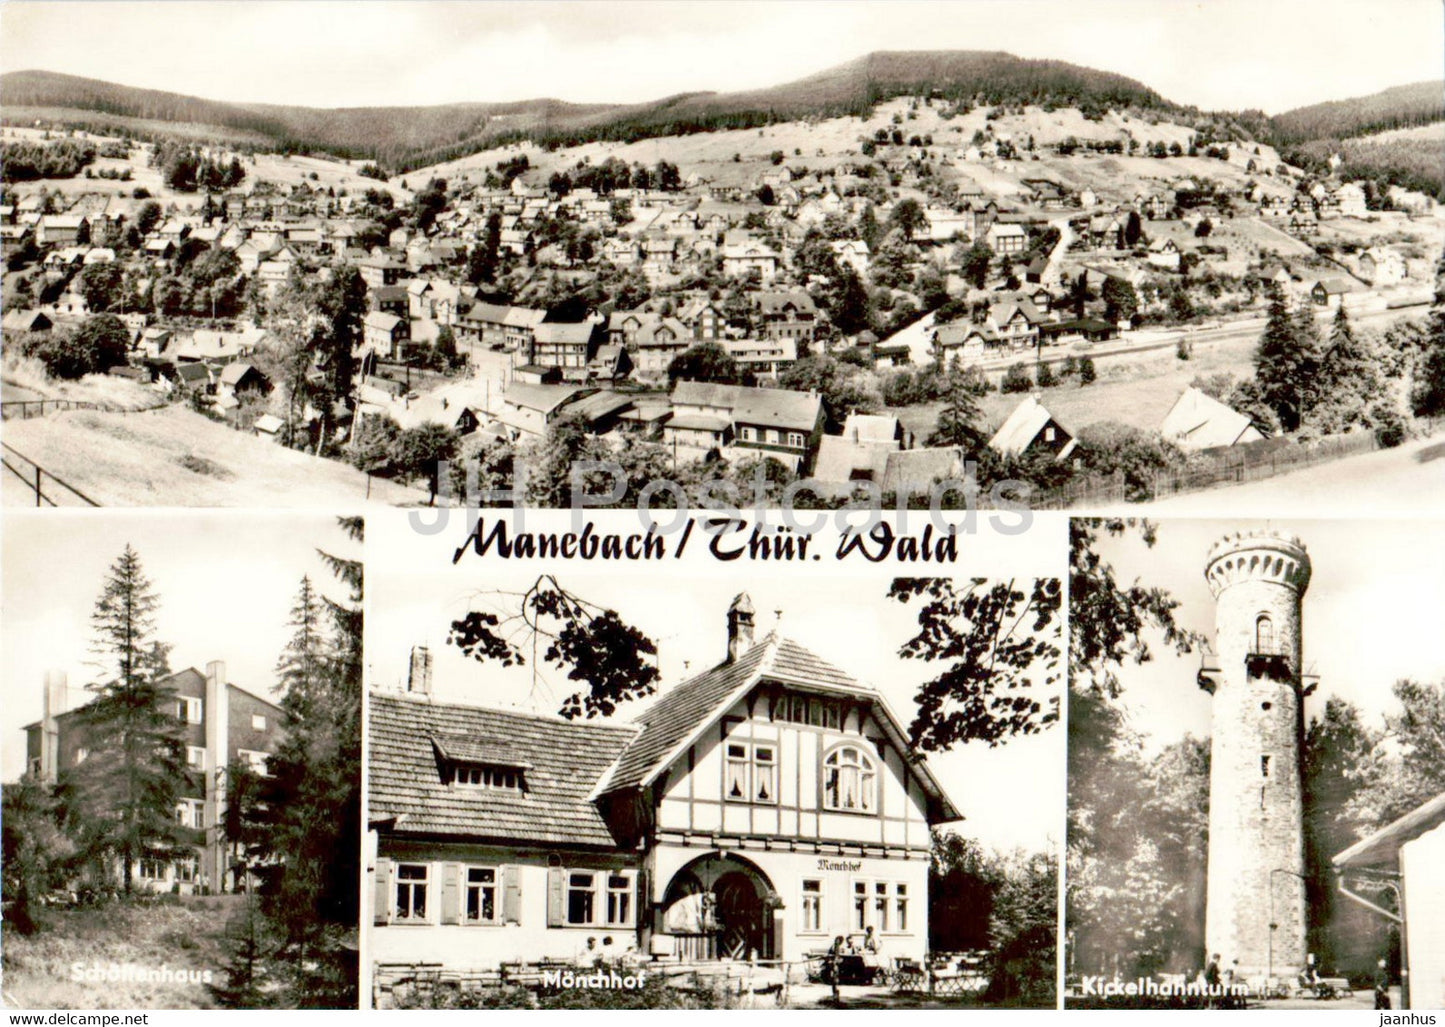 Manebach - Thur Wald - Schoffenhaus - Monchhof - Kickelhannturm - Thur Wald - old postcard - 1972 - Germany DDR - used - JH Postcards